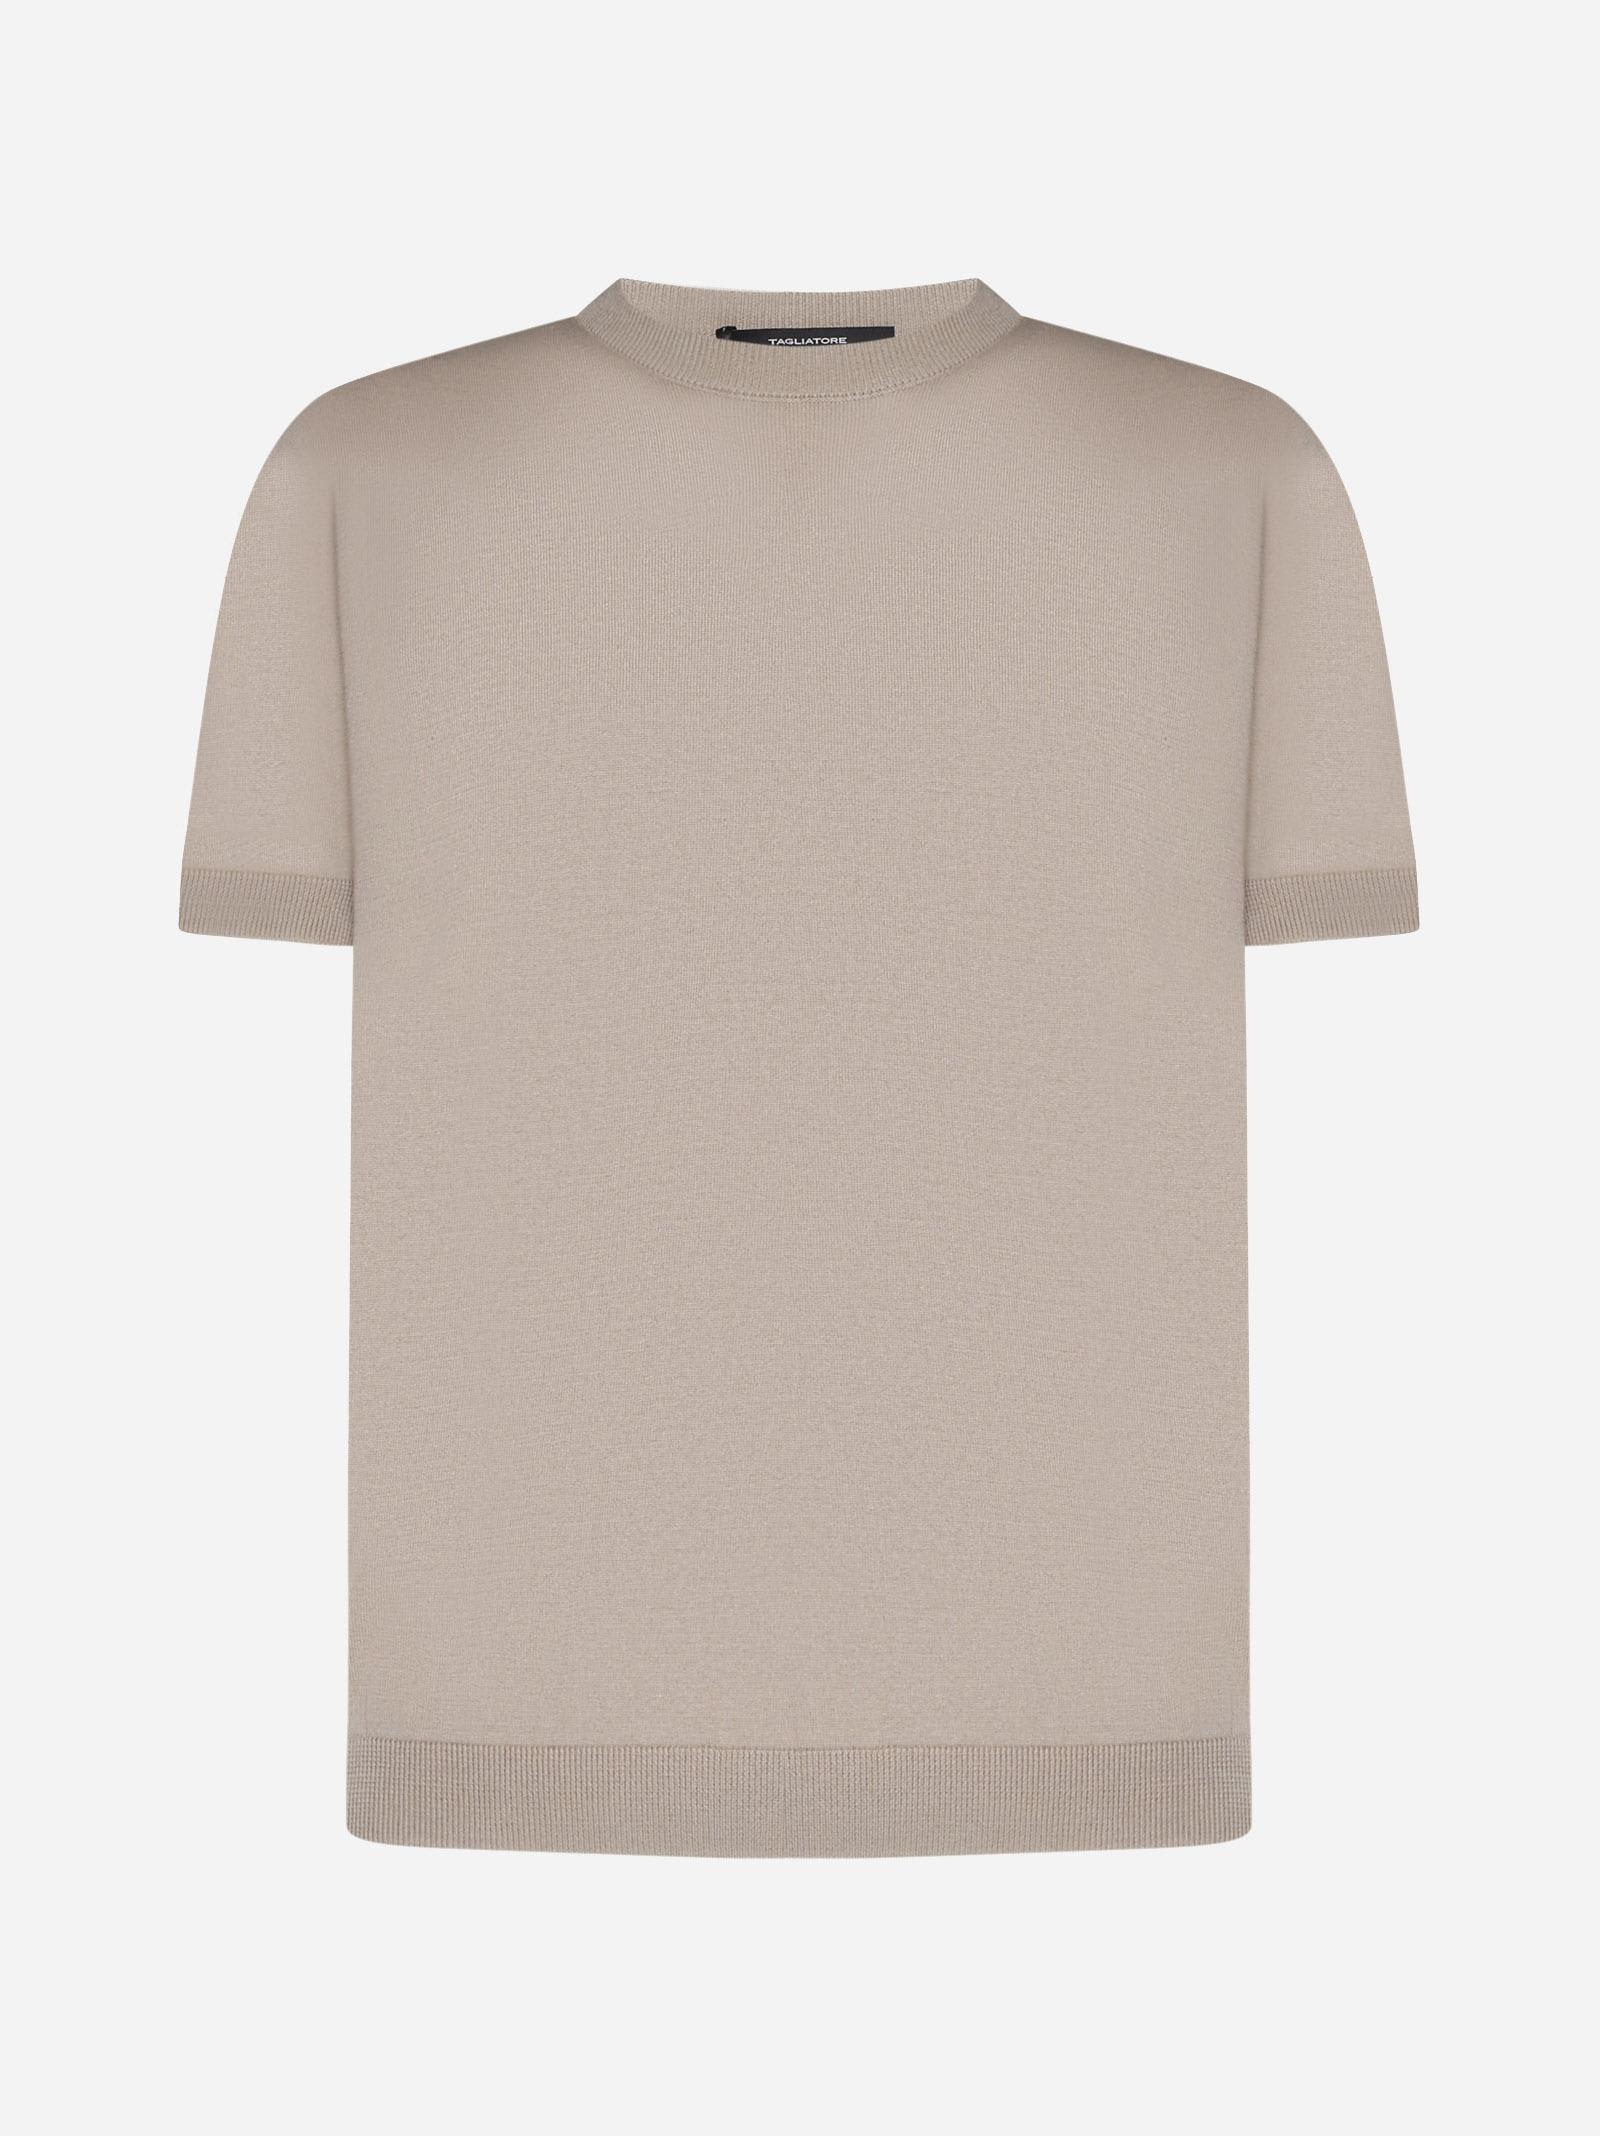 Tagliatore Knit Cotton T-shirt In Neutral